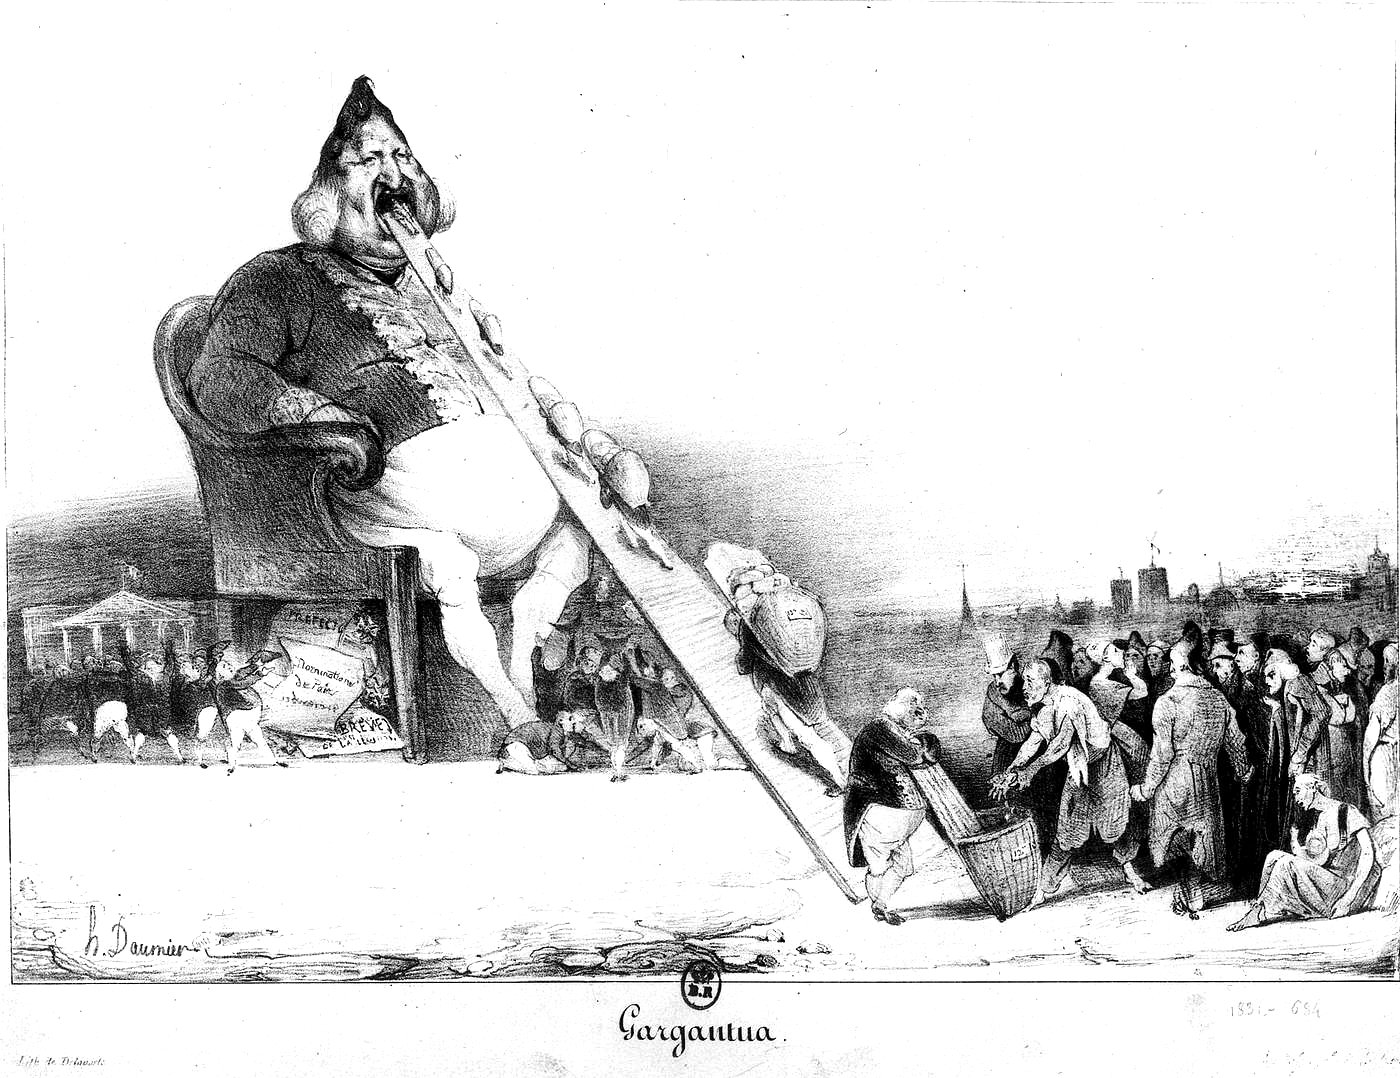 Gargantua, Honoré Daumier